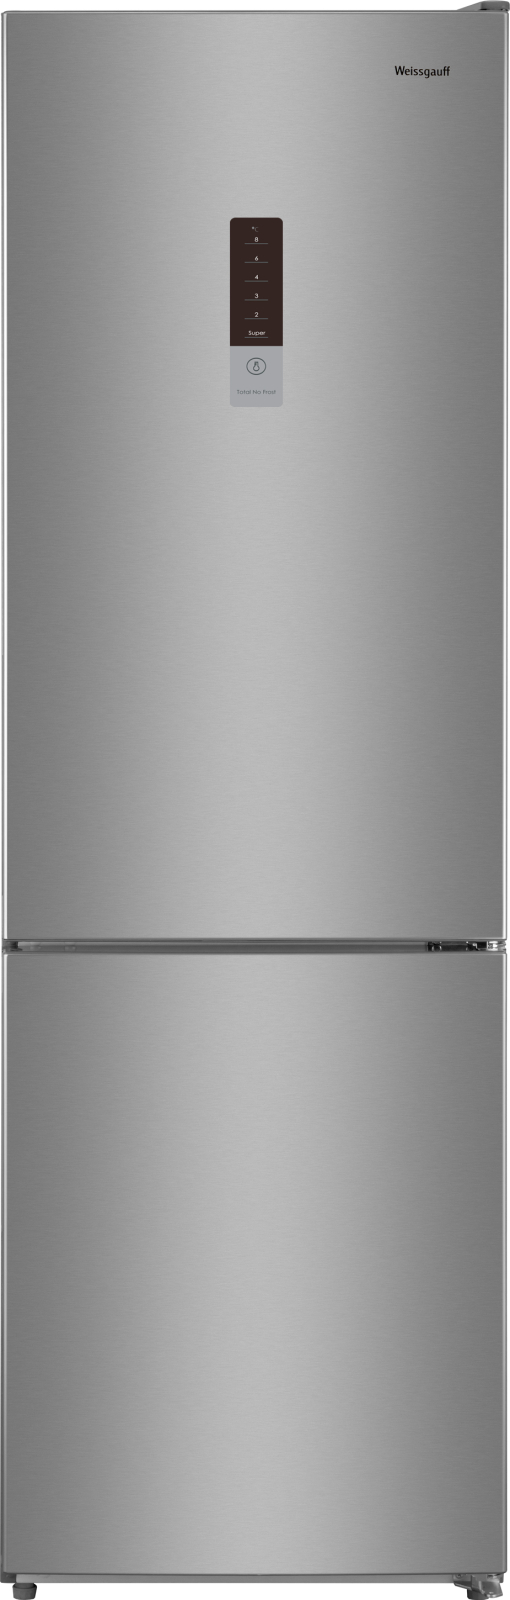 Холодильник Weissgauff WRK 190 DX серебристый холодильник weissgauff wcd 450 x серебристый